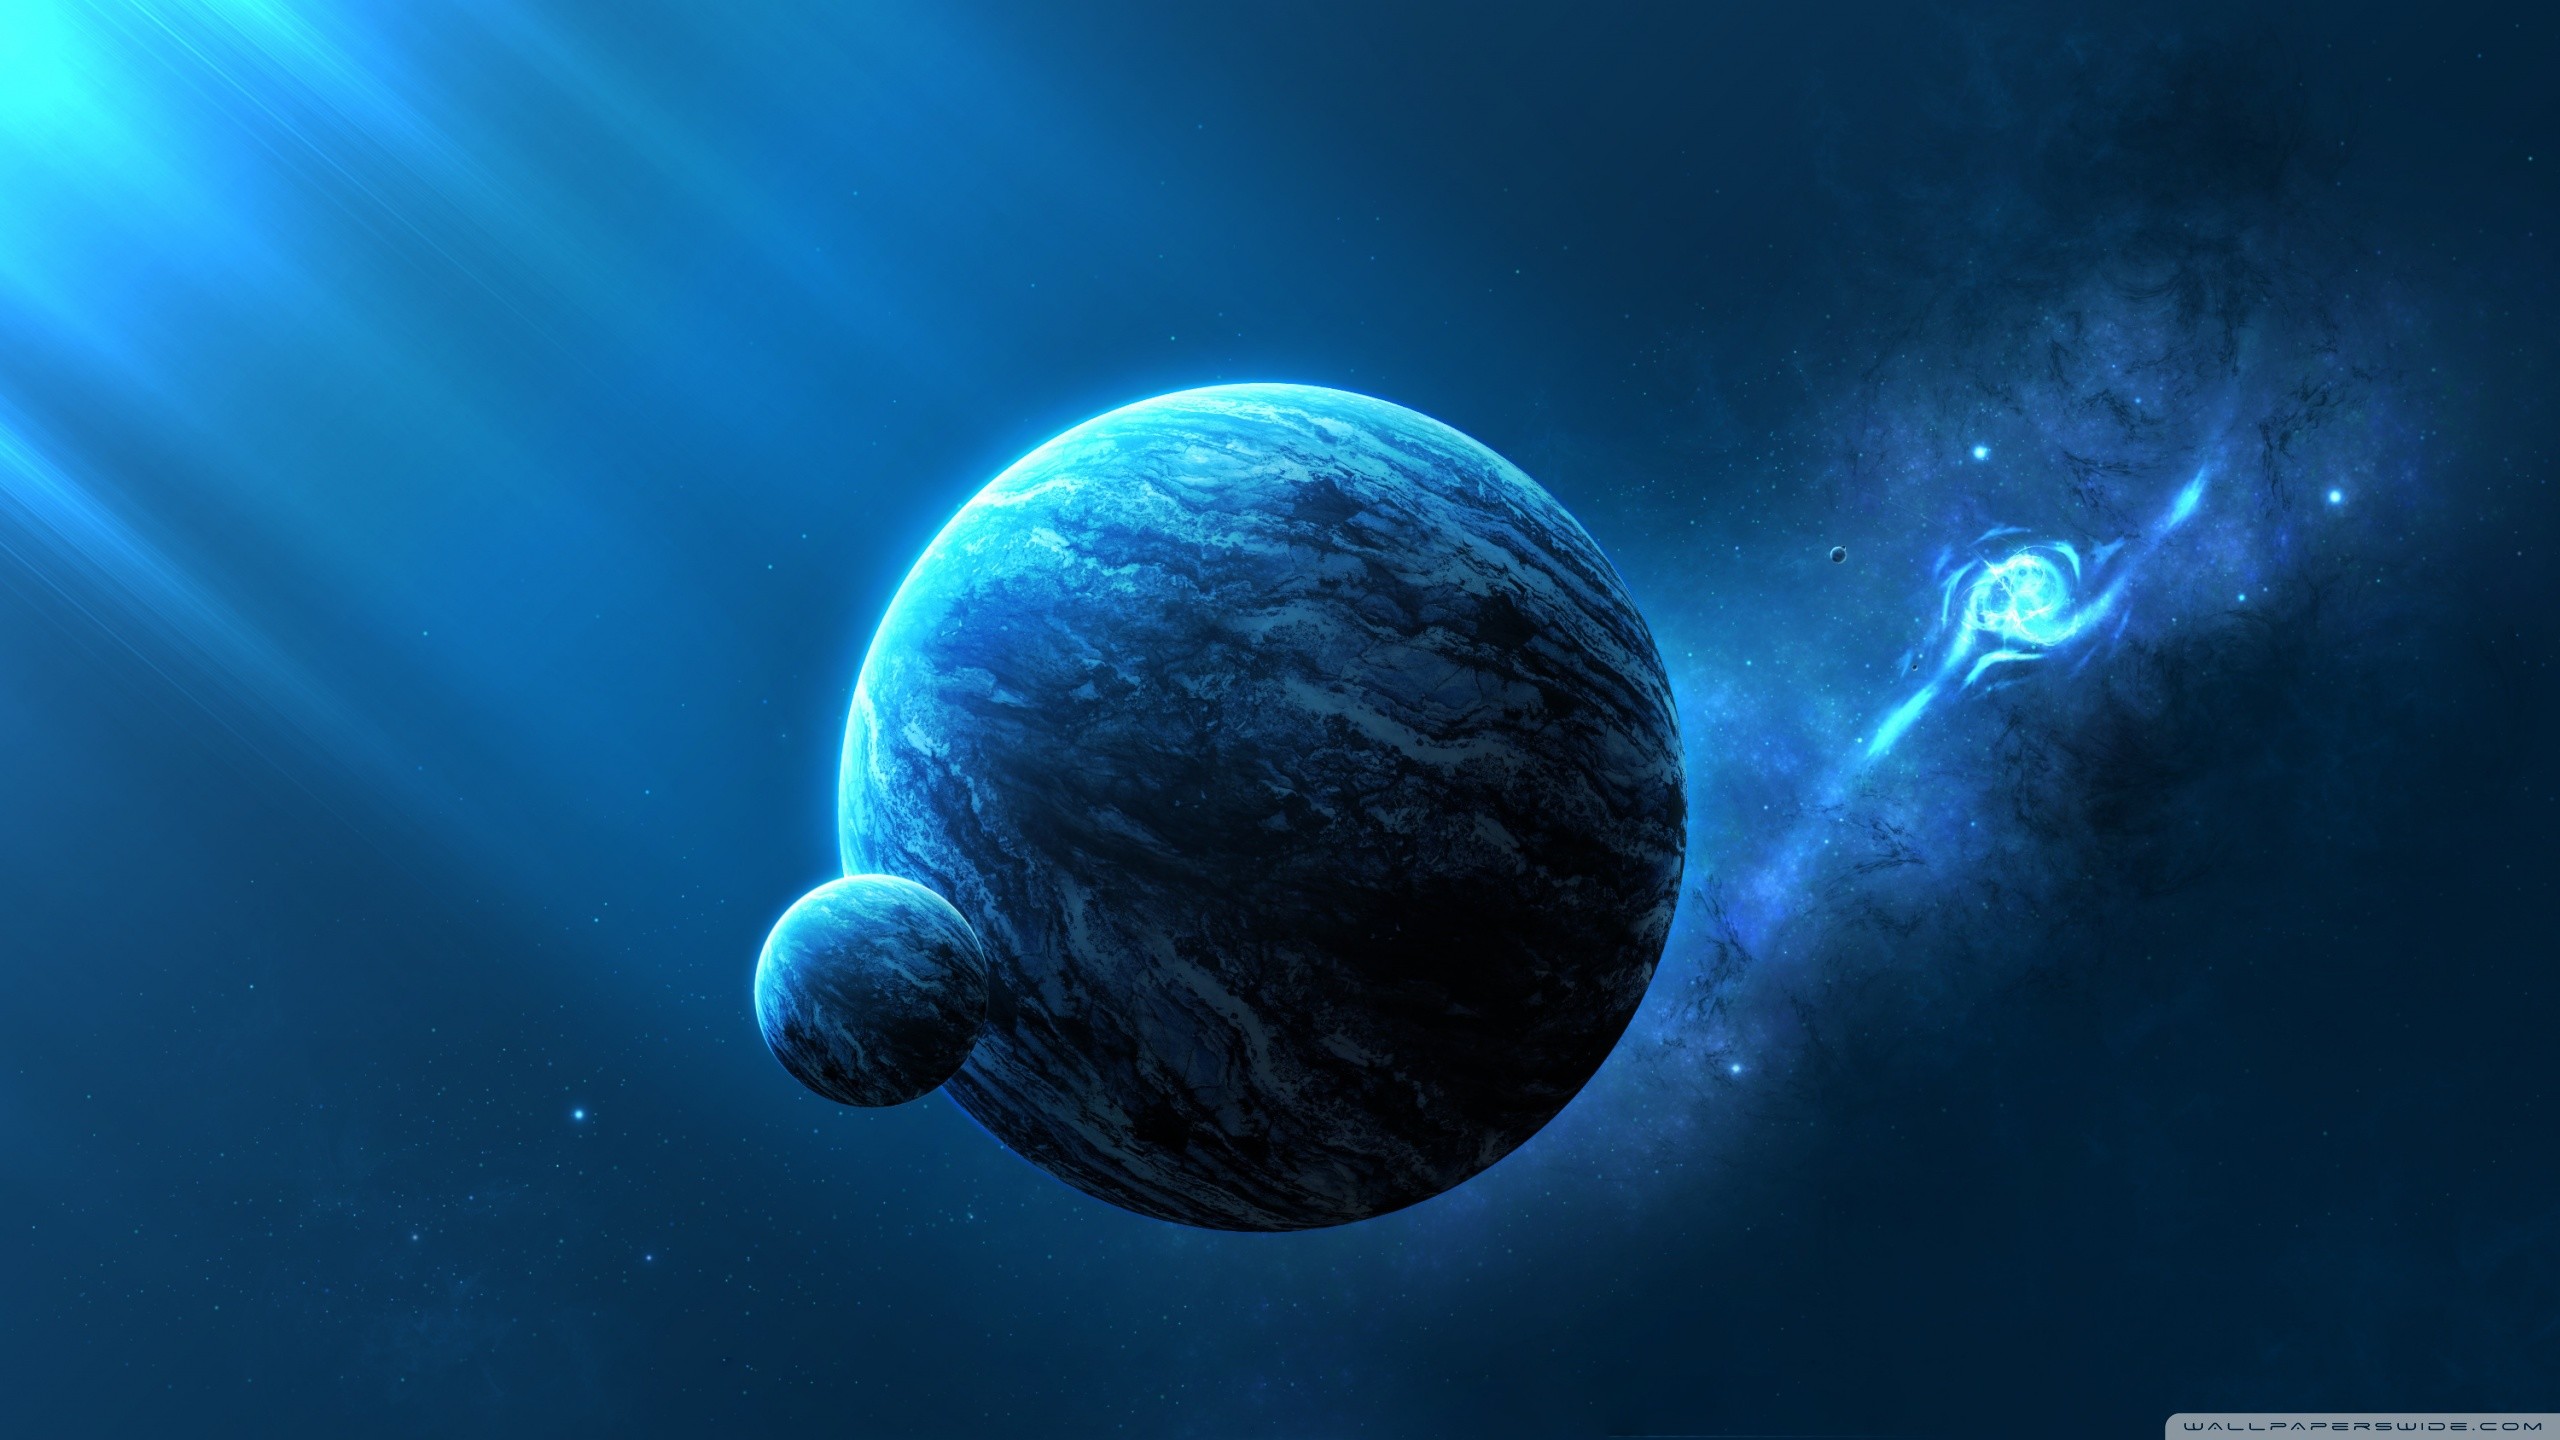 Planet: Uranus by soPWNEDXcore on DeviantArt